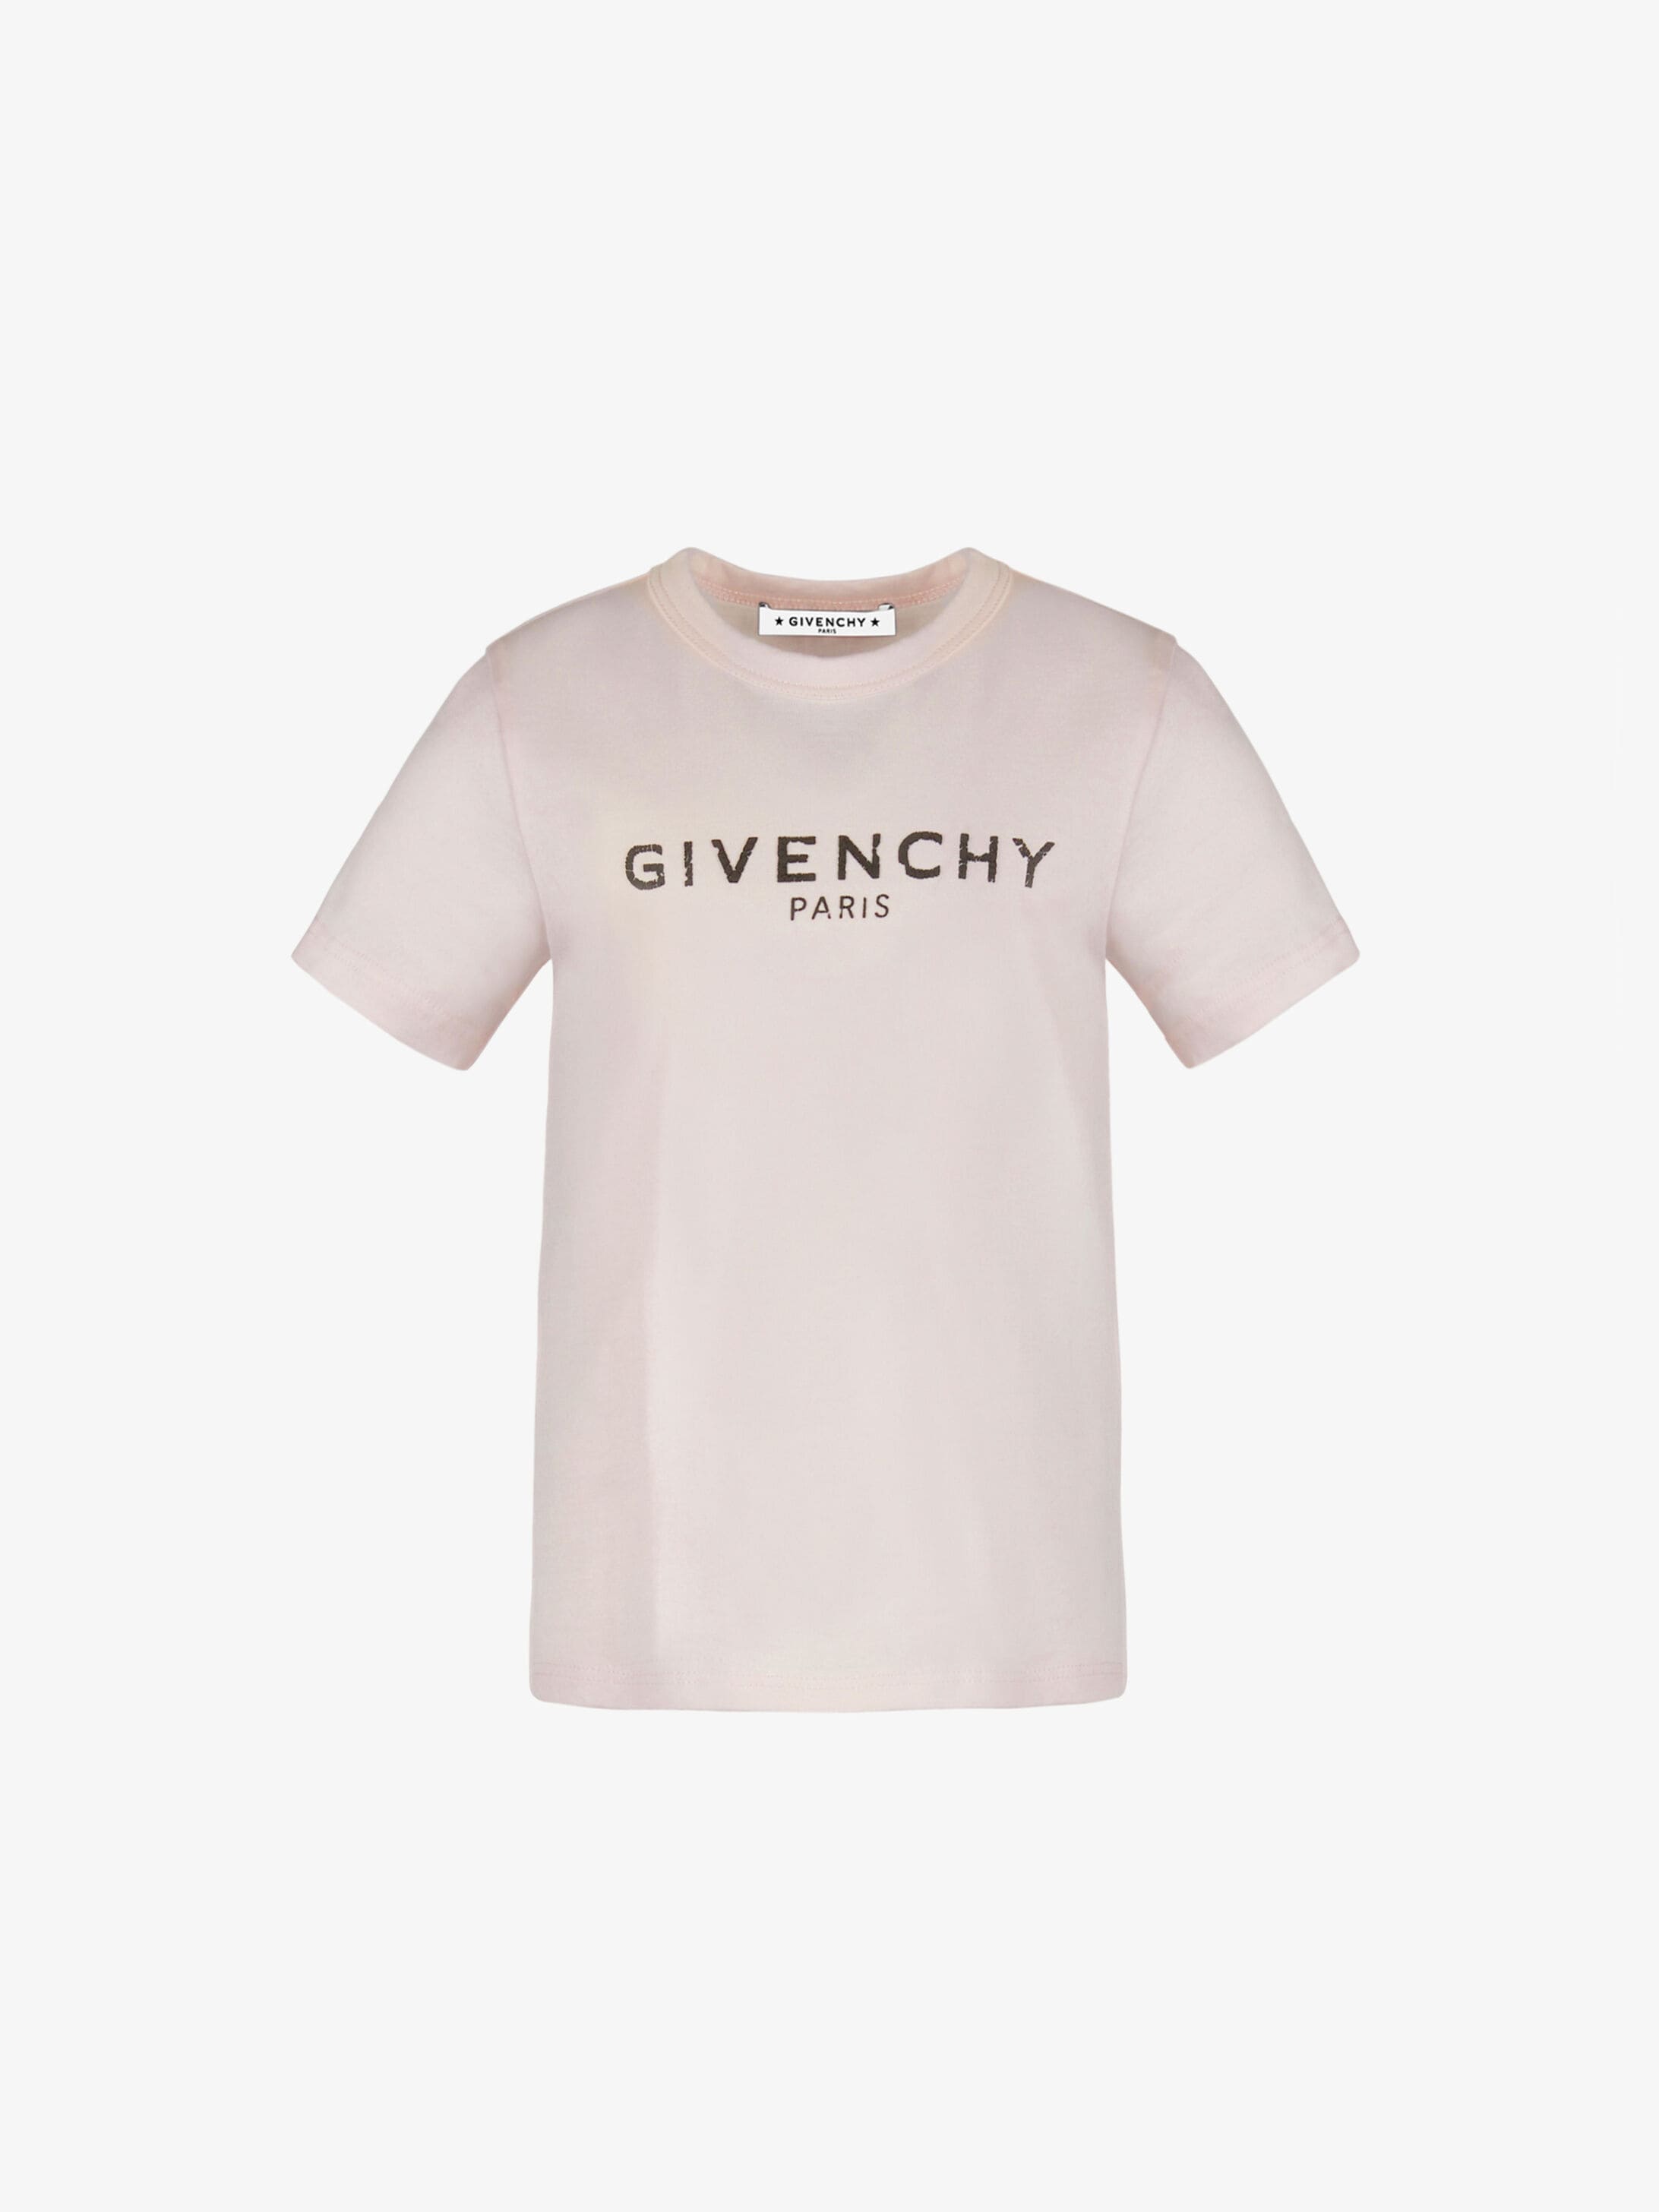 GIVENCHY PARIS t-shirt in cotton jersey | GIVENCHY Paris